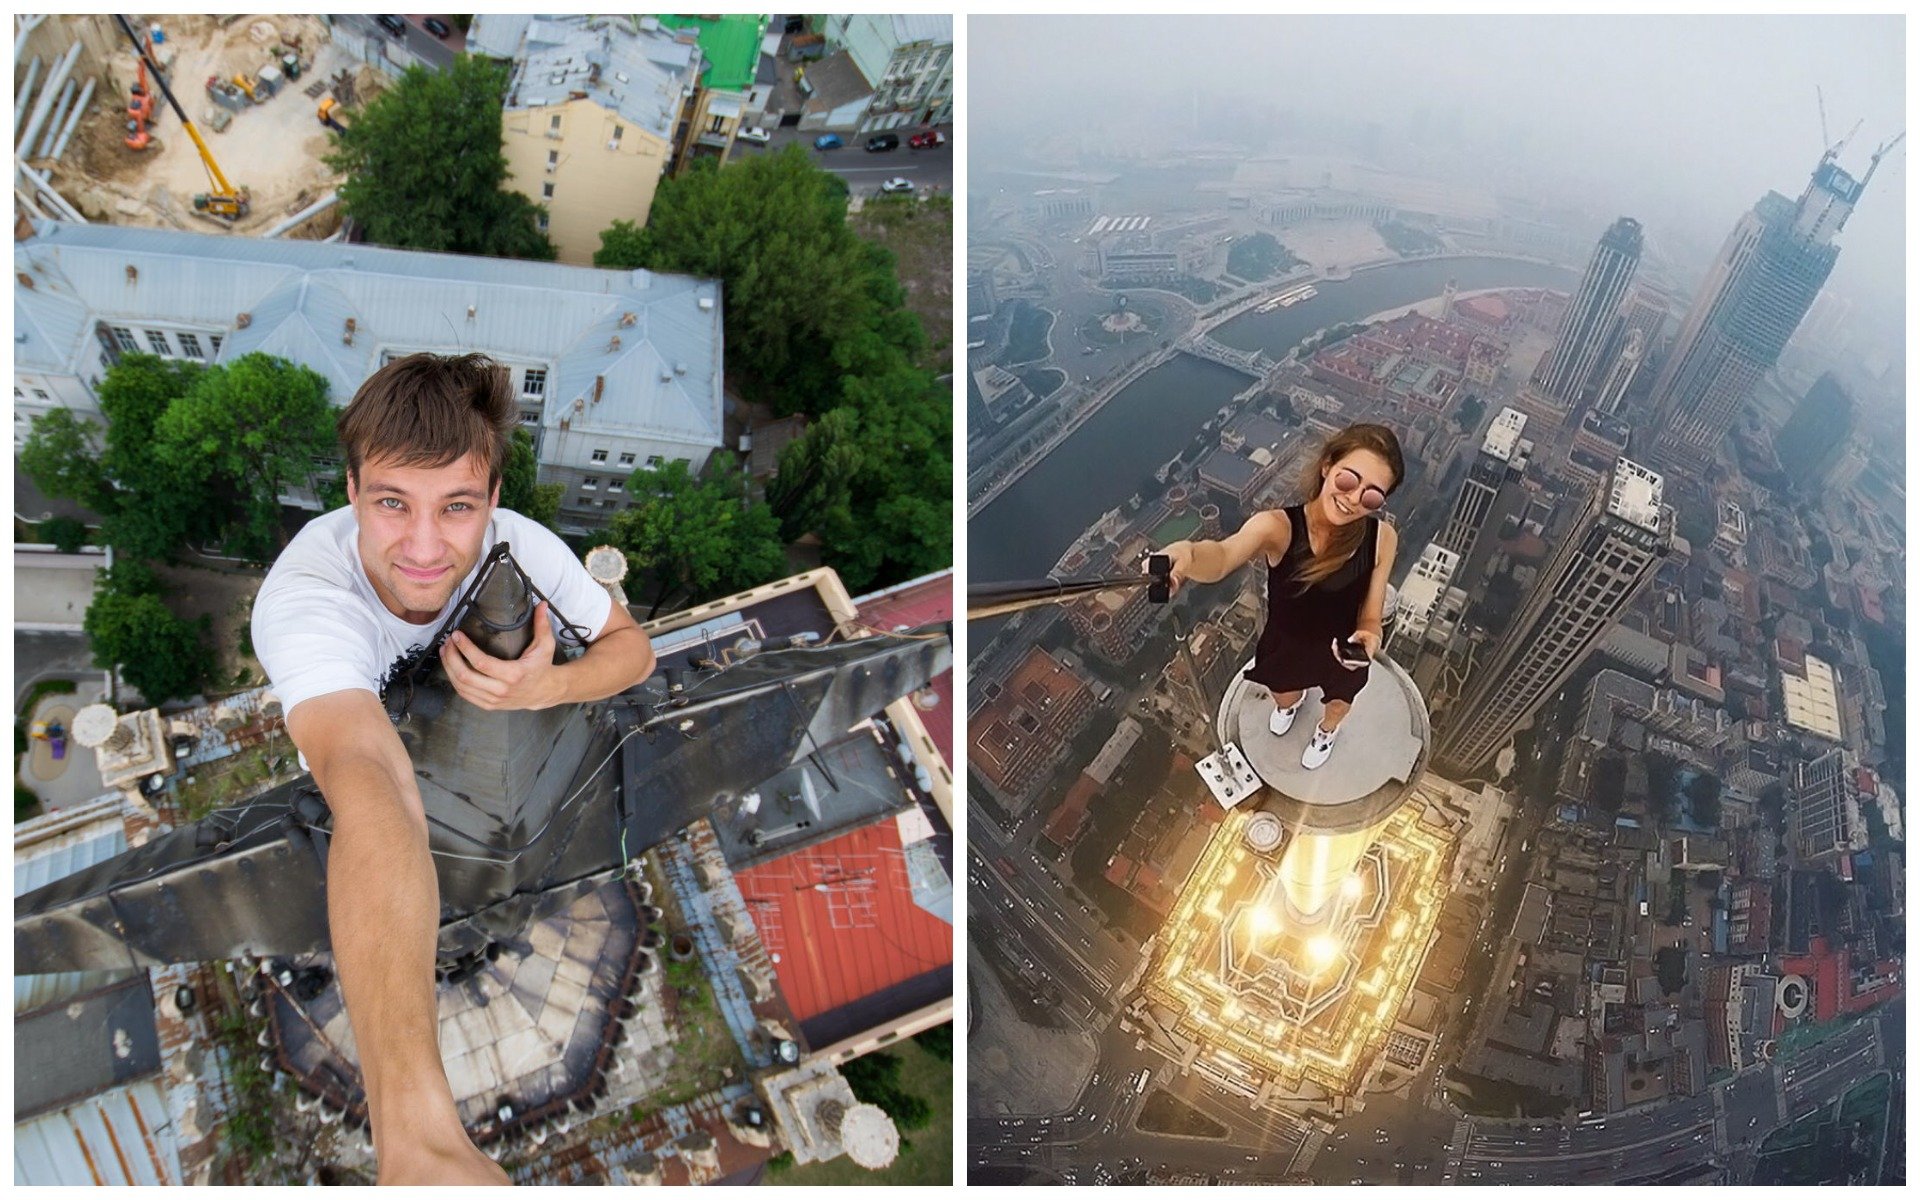 Meet Angela Nikolau, the Russian Daredevil Girl Who Climbs Most Dangerous P...